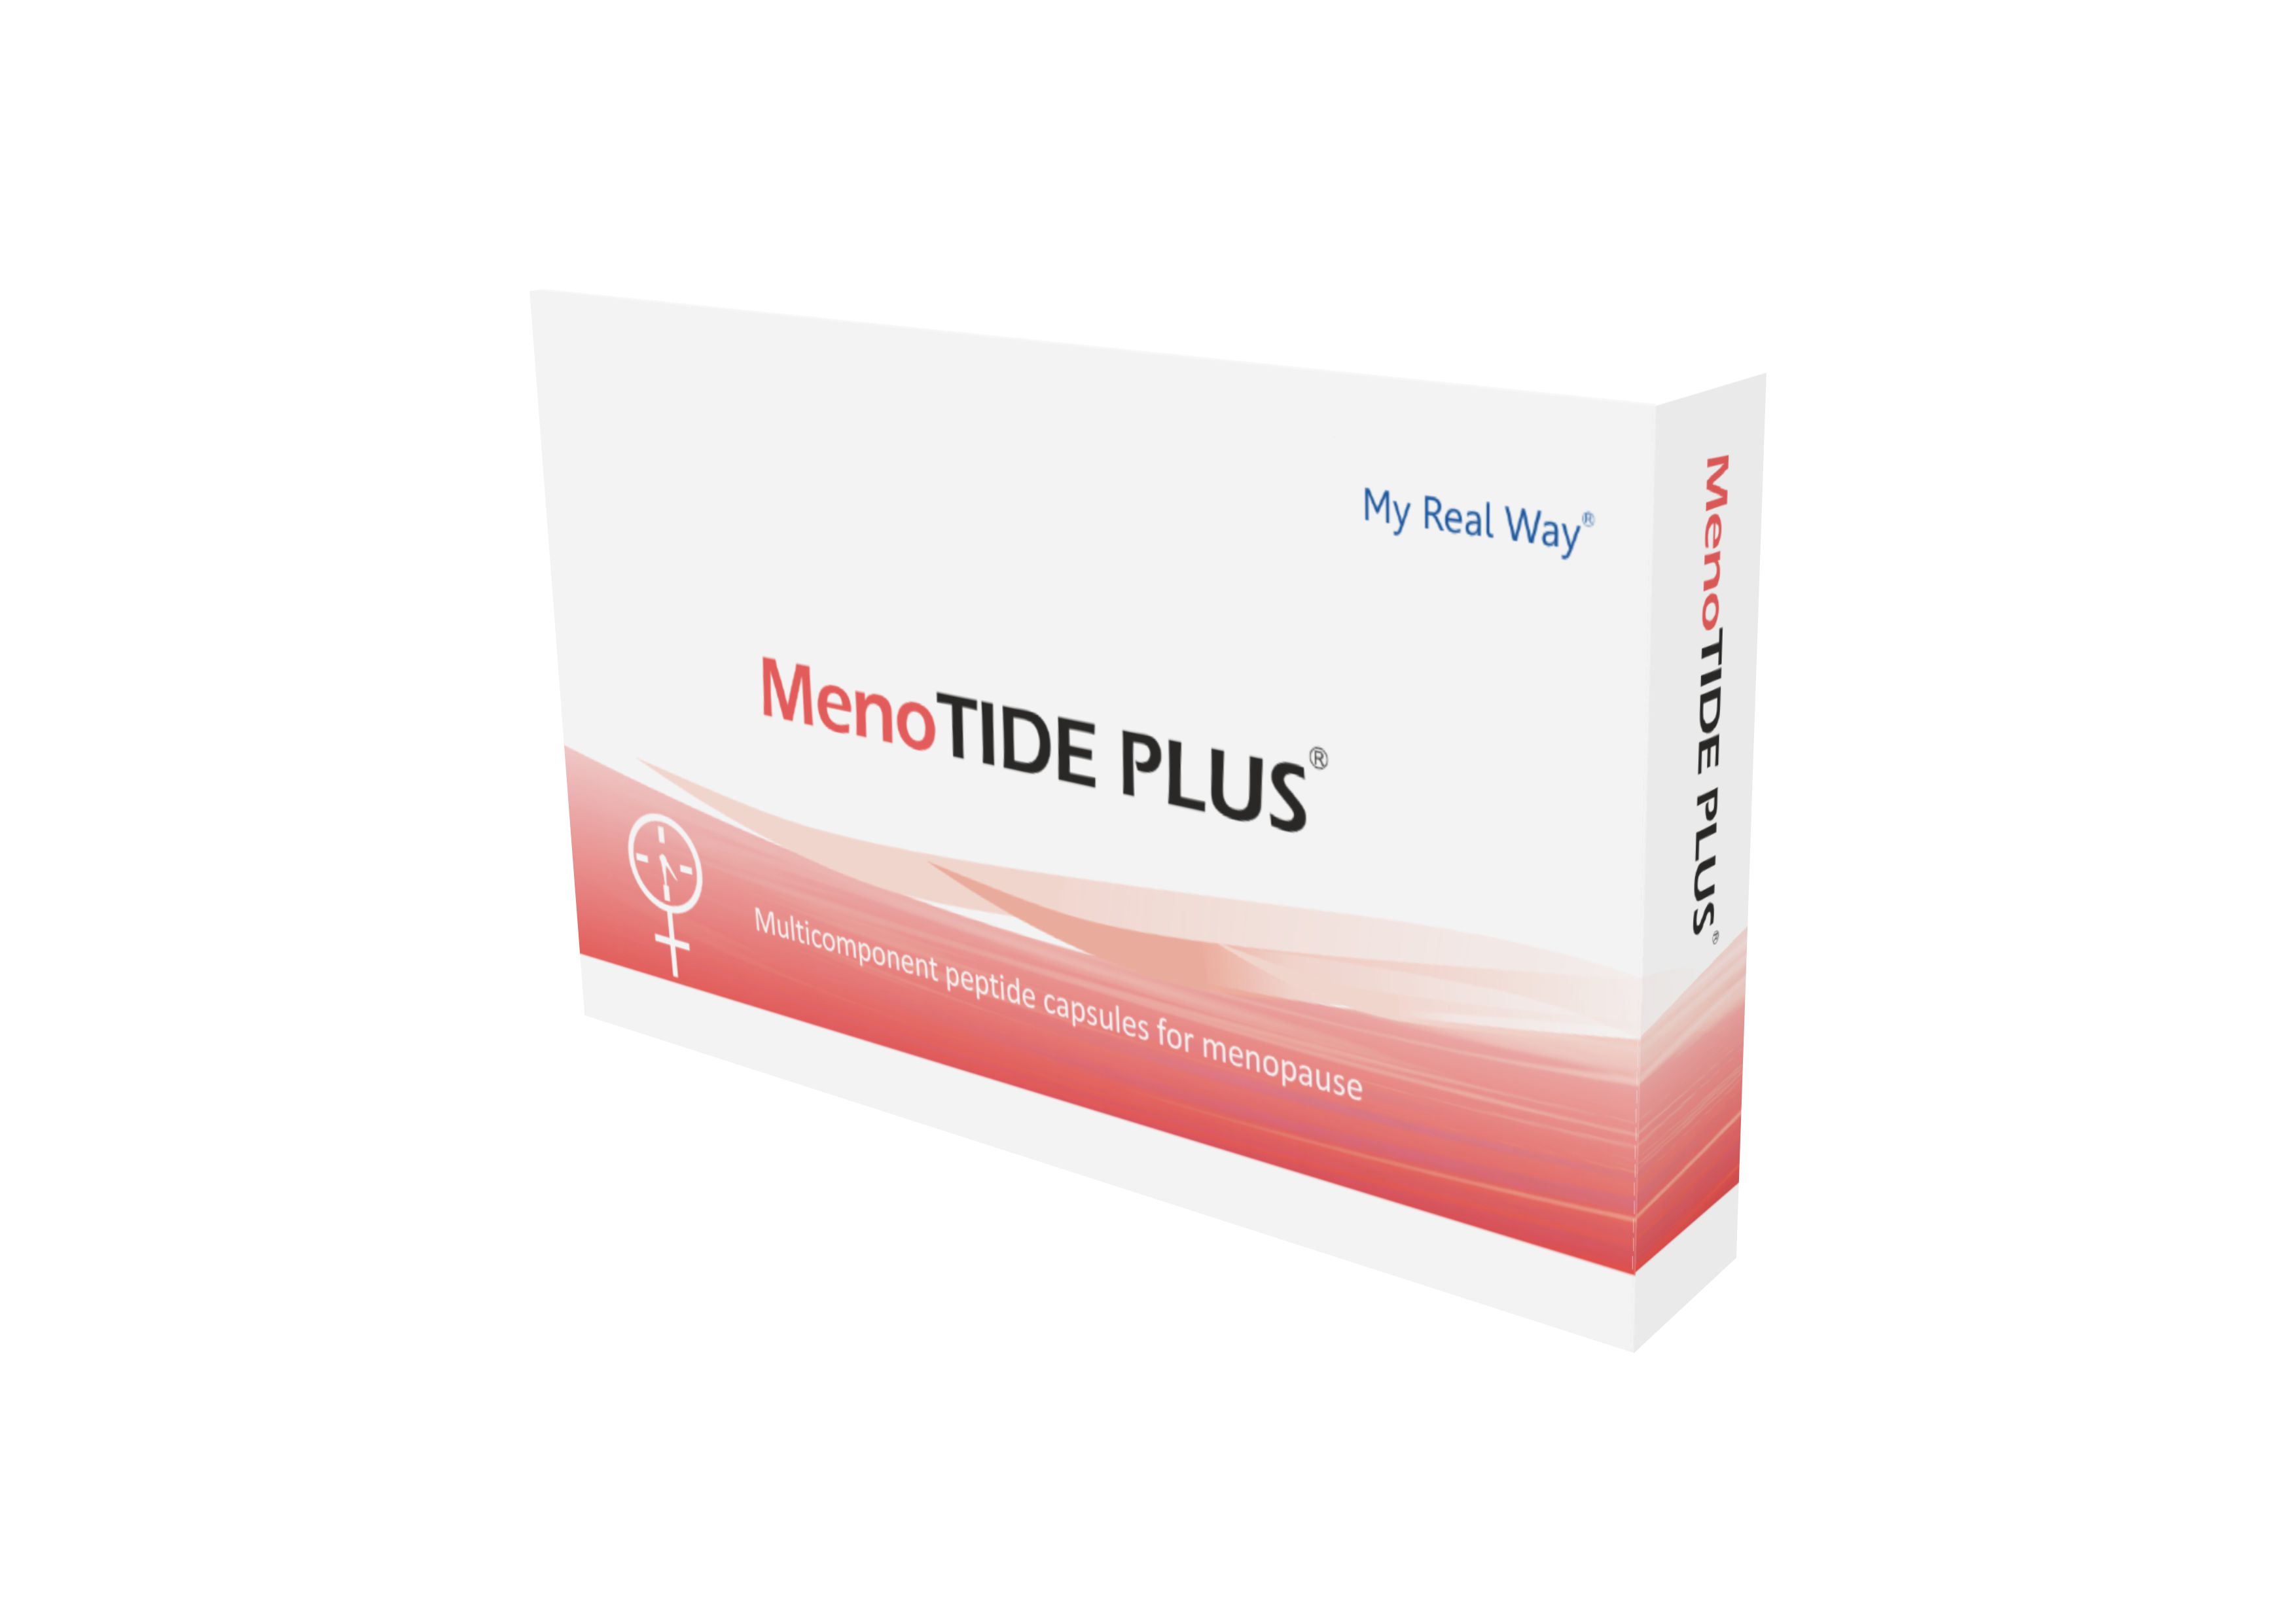 MenoTIDE PLUS (Менотайд) пептиды при менопаузе